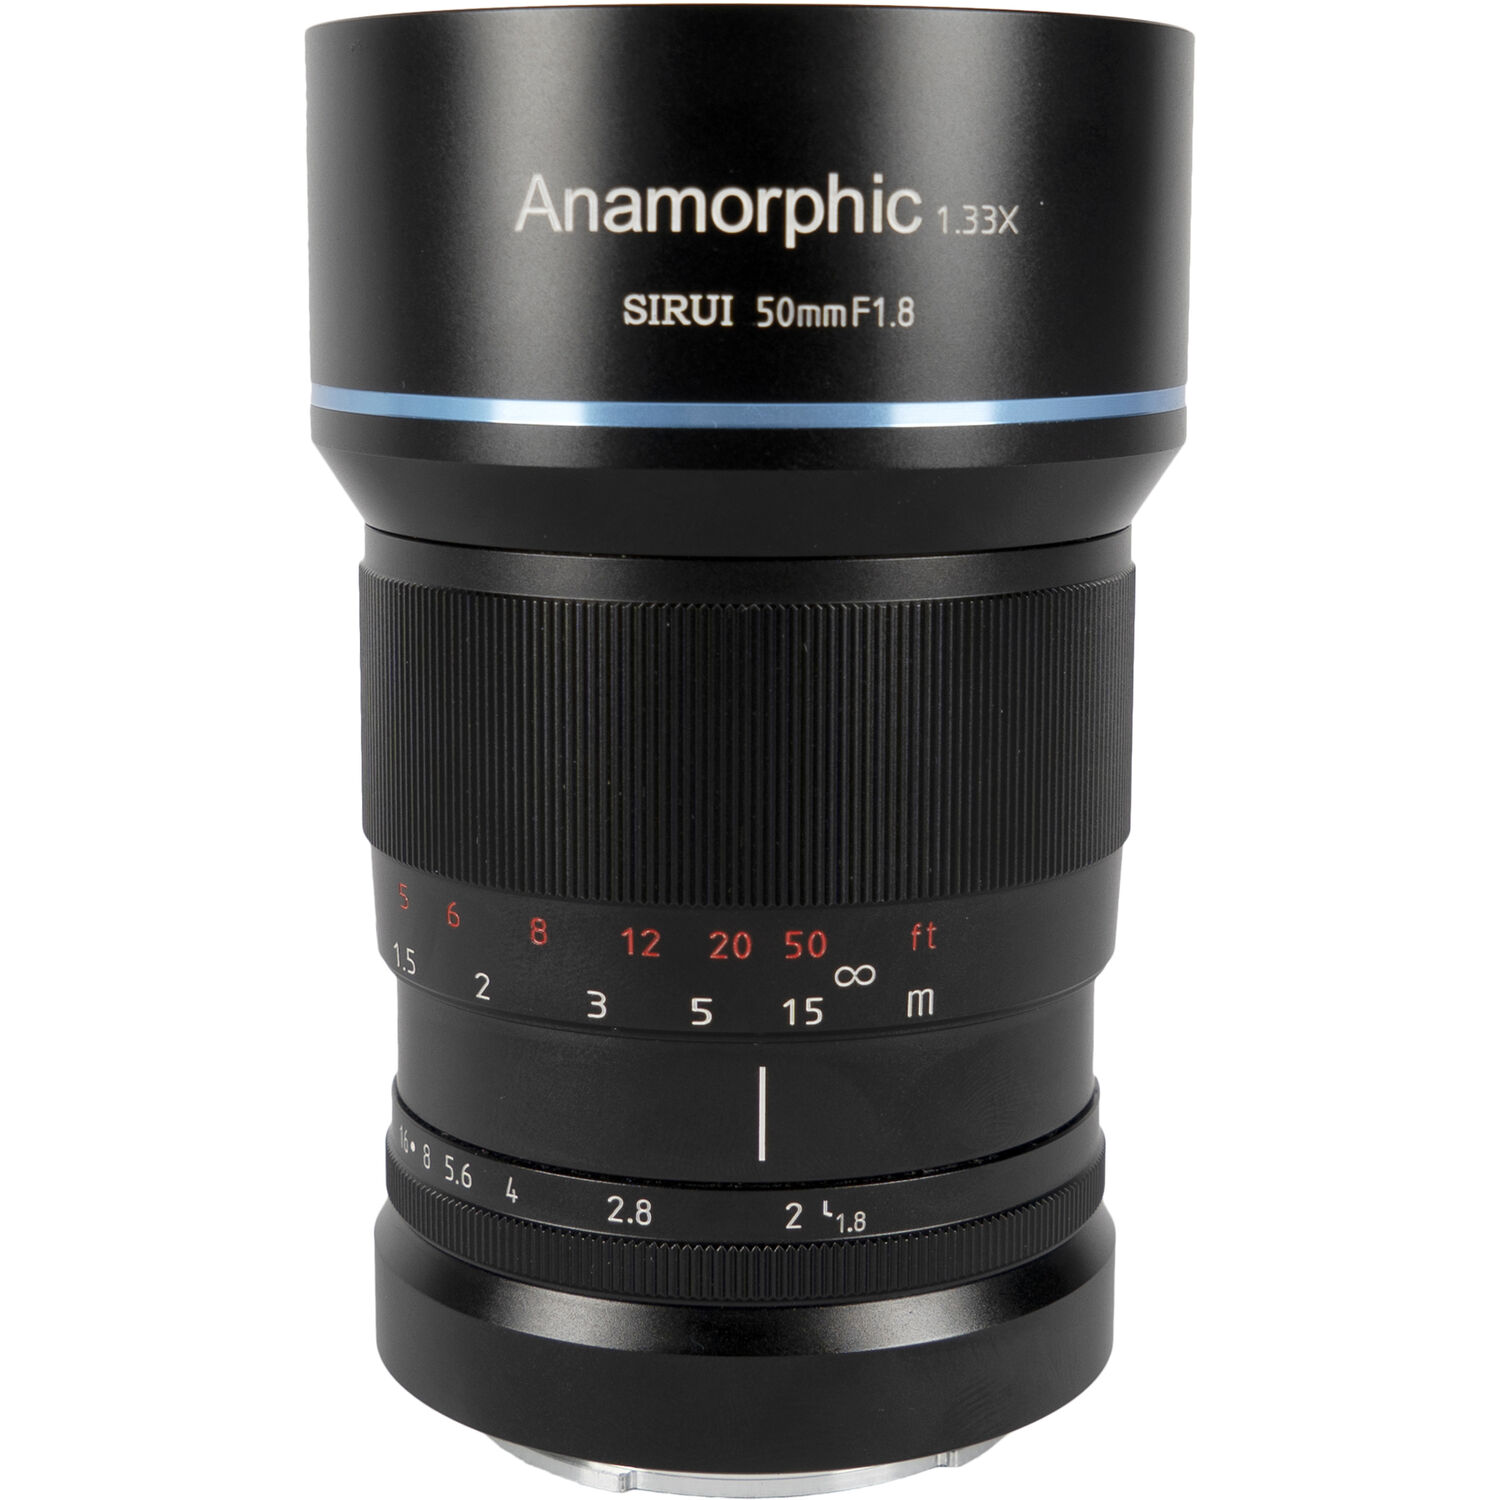 Sirui 50mm f/1.8 Super35 Anamorphic 1.33x Lens (RF Mount) $349.00 @B&H Deal Zone